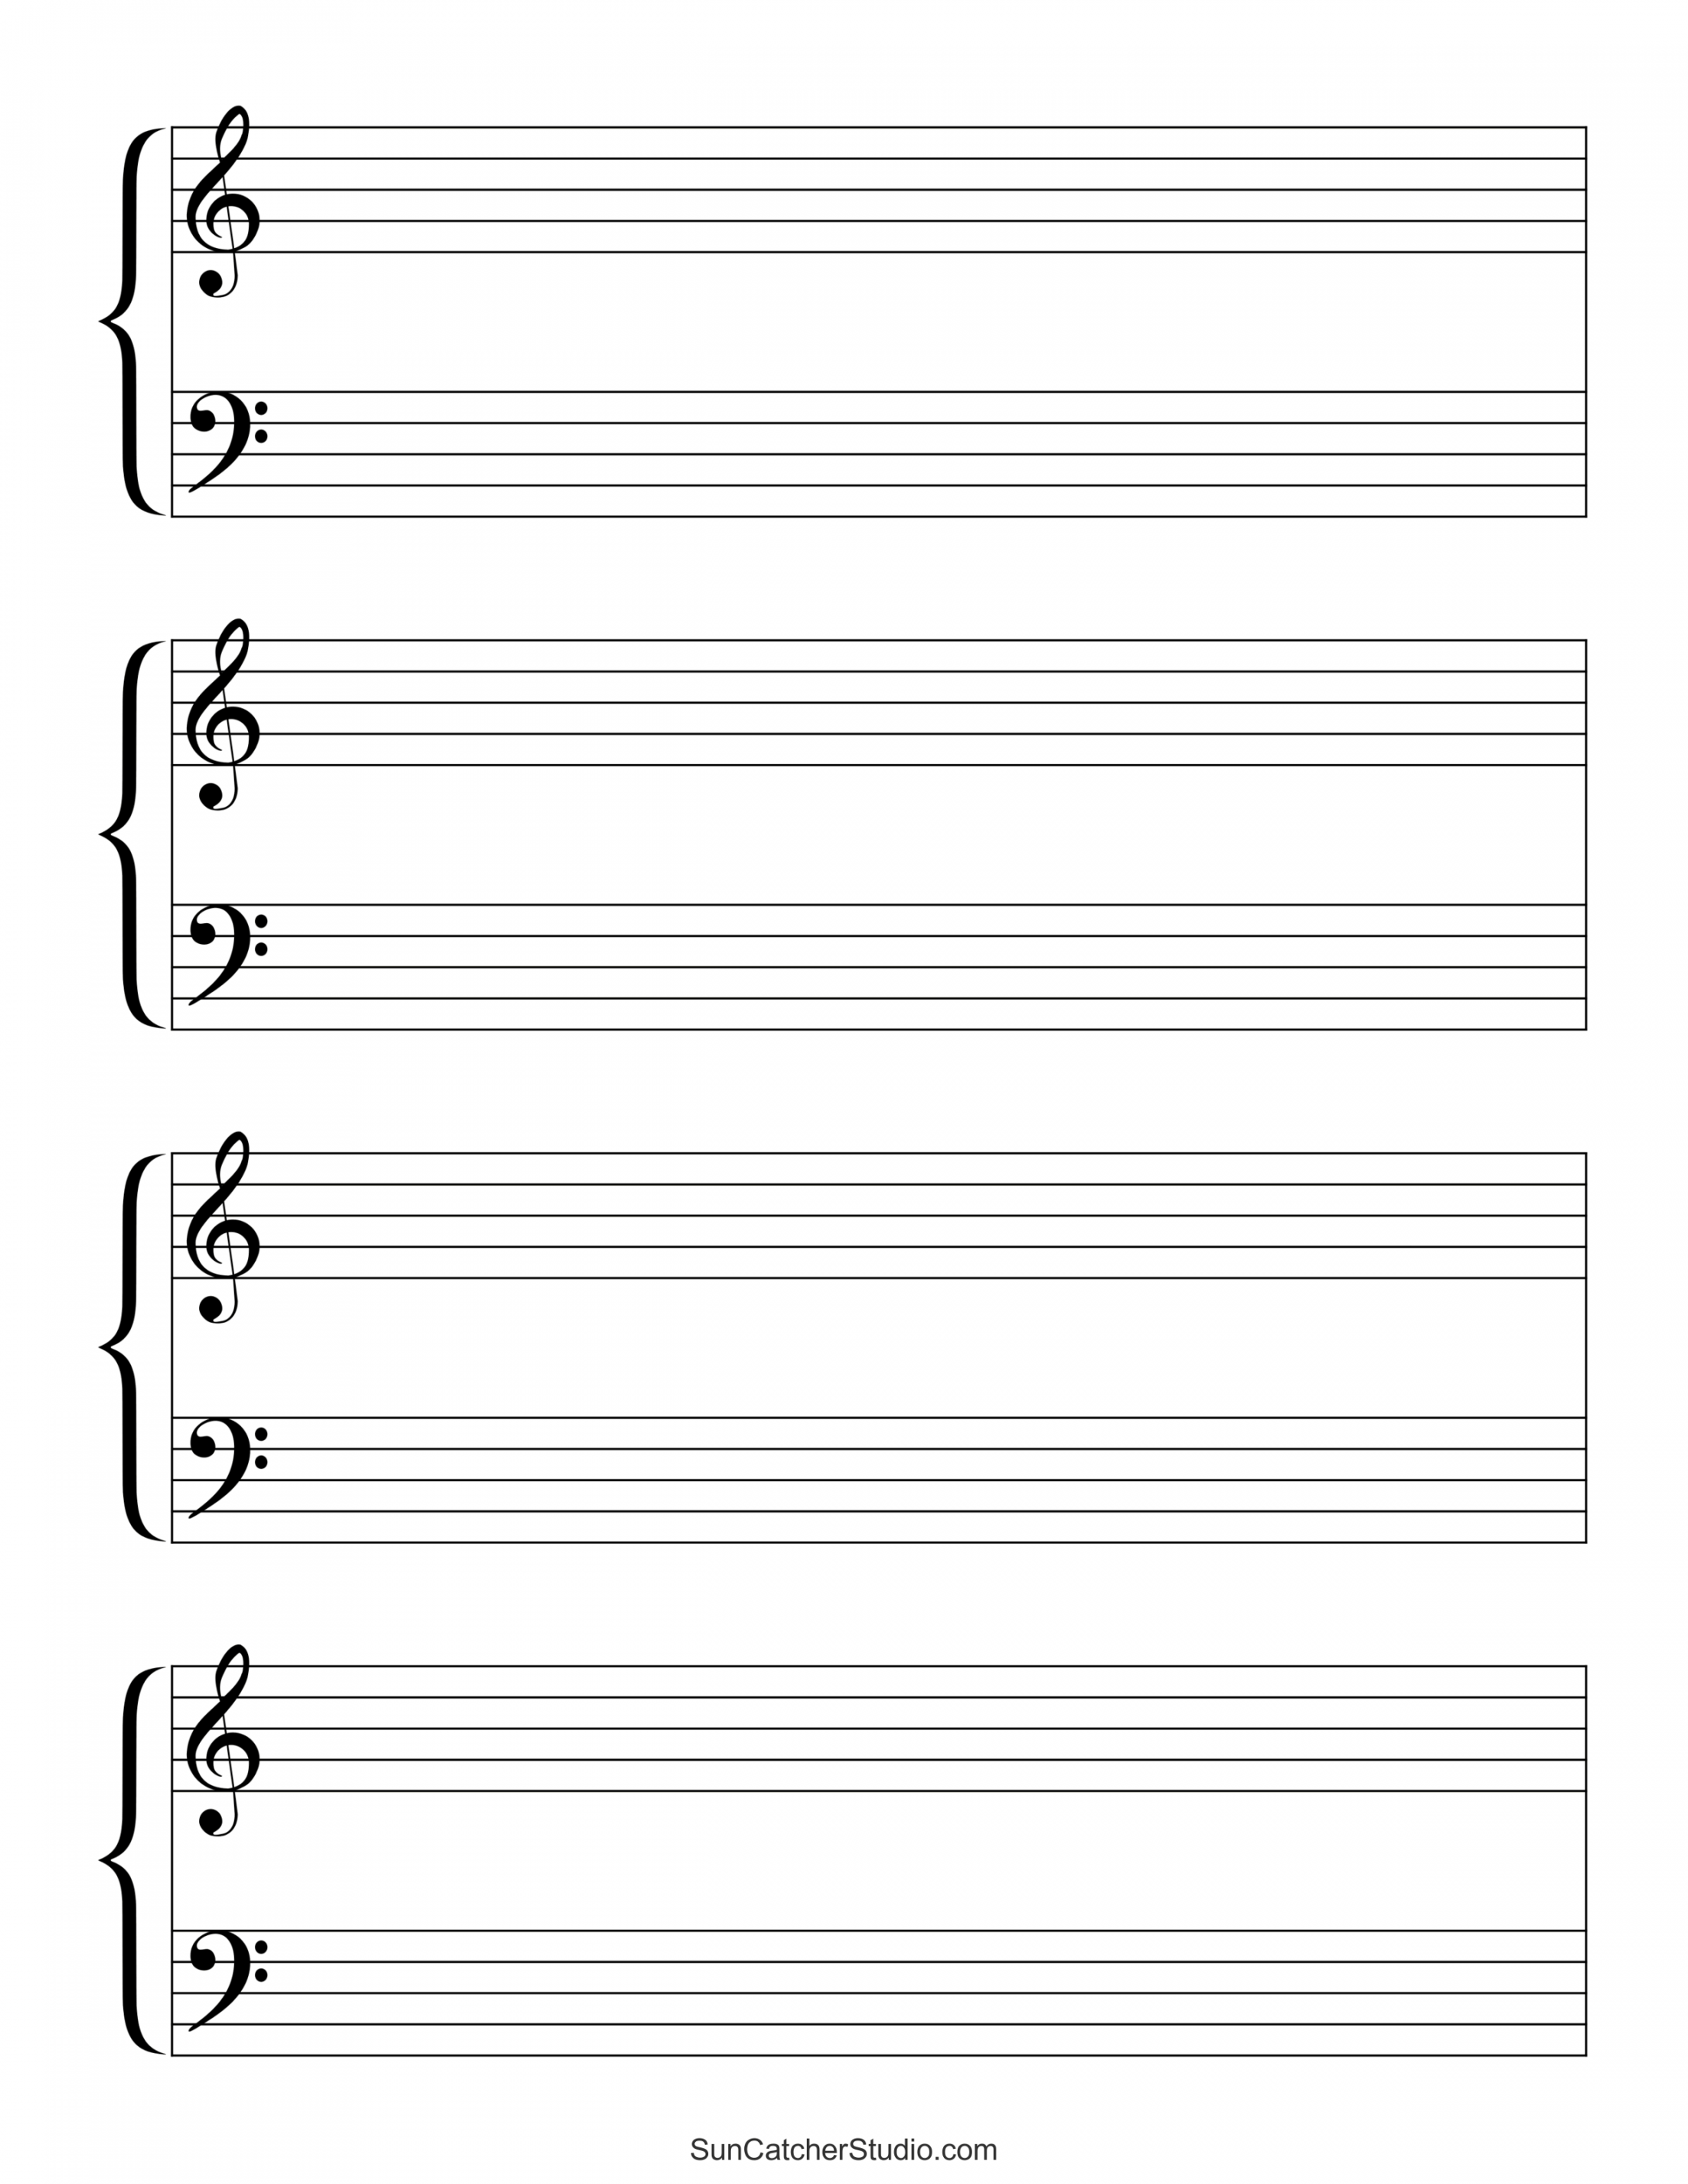 Free Printable Blank Sheet Music - Printable - Blank Sheet Music (Free Printable Staff Paper) – DIY Projects